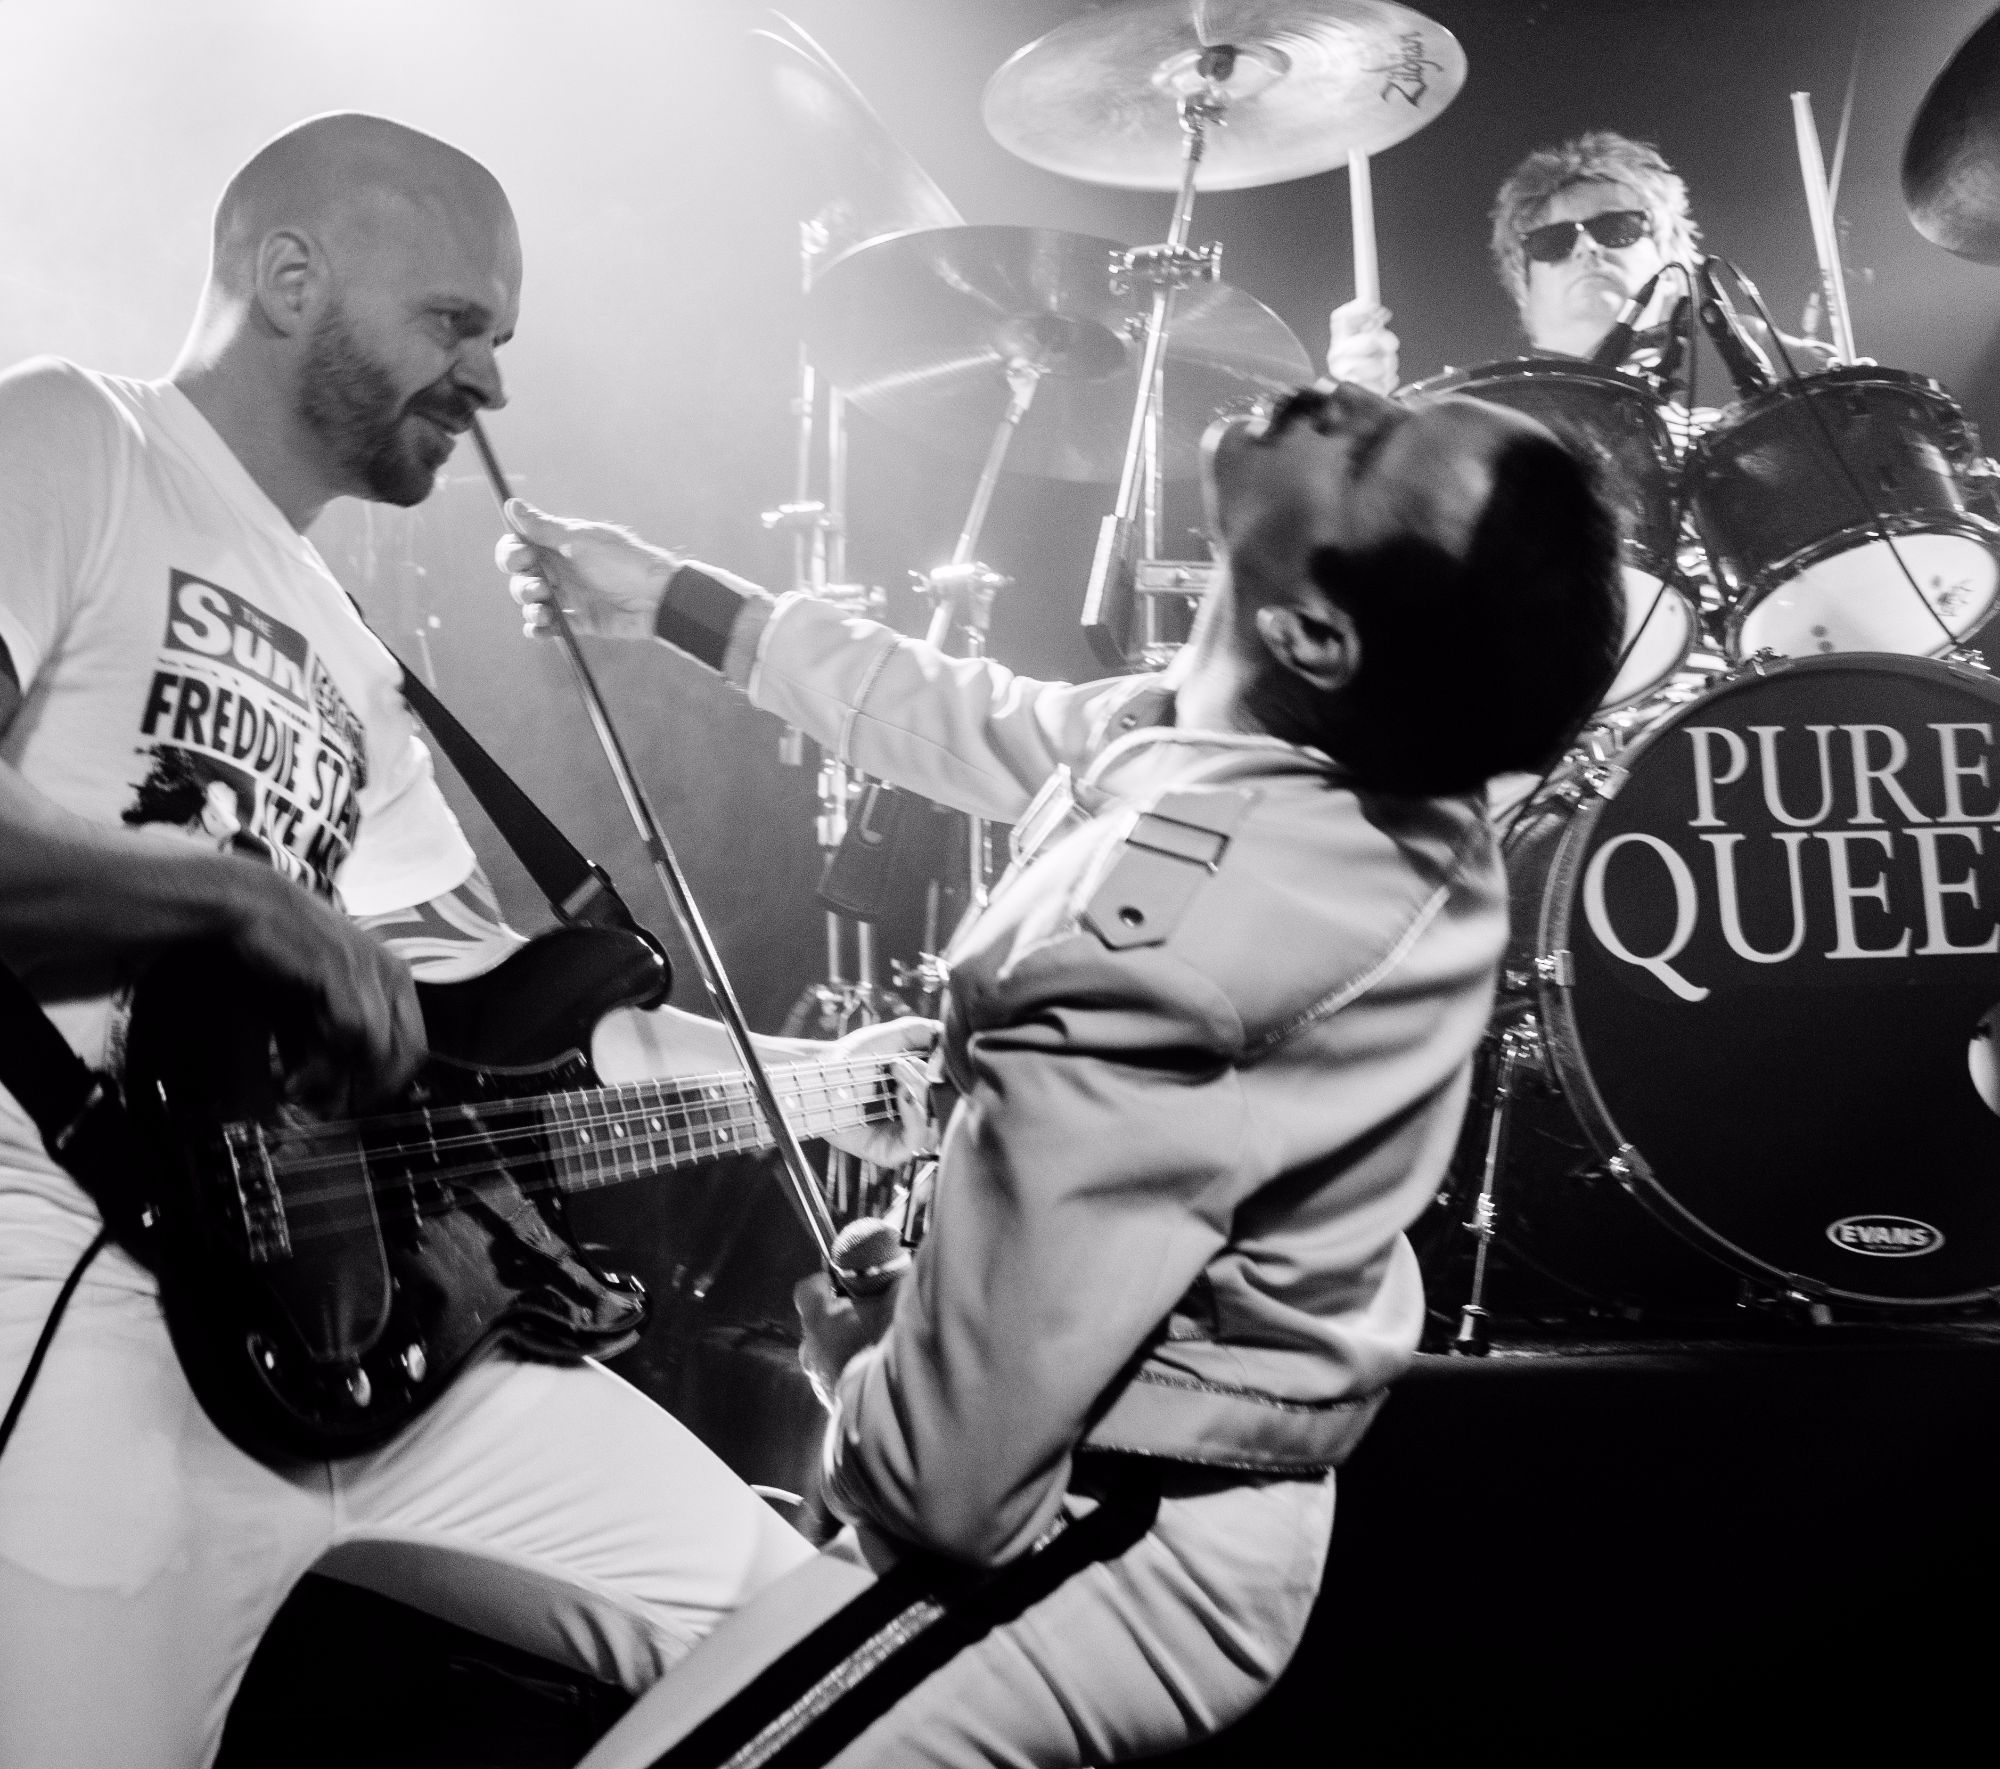 Freddie Mercury and John Deacon Pure Queen